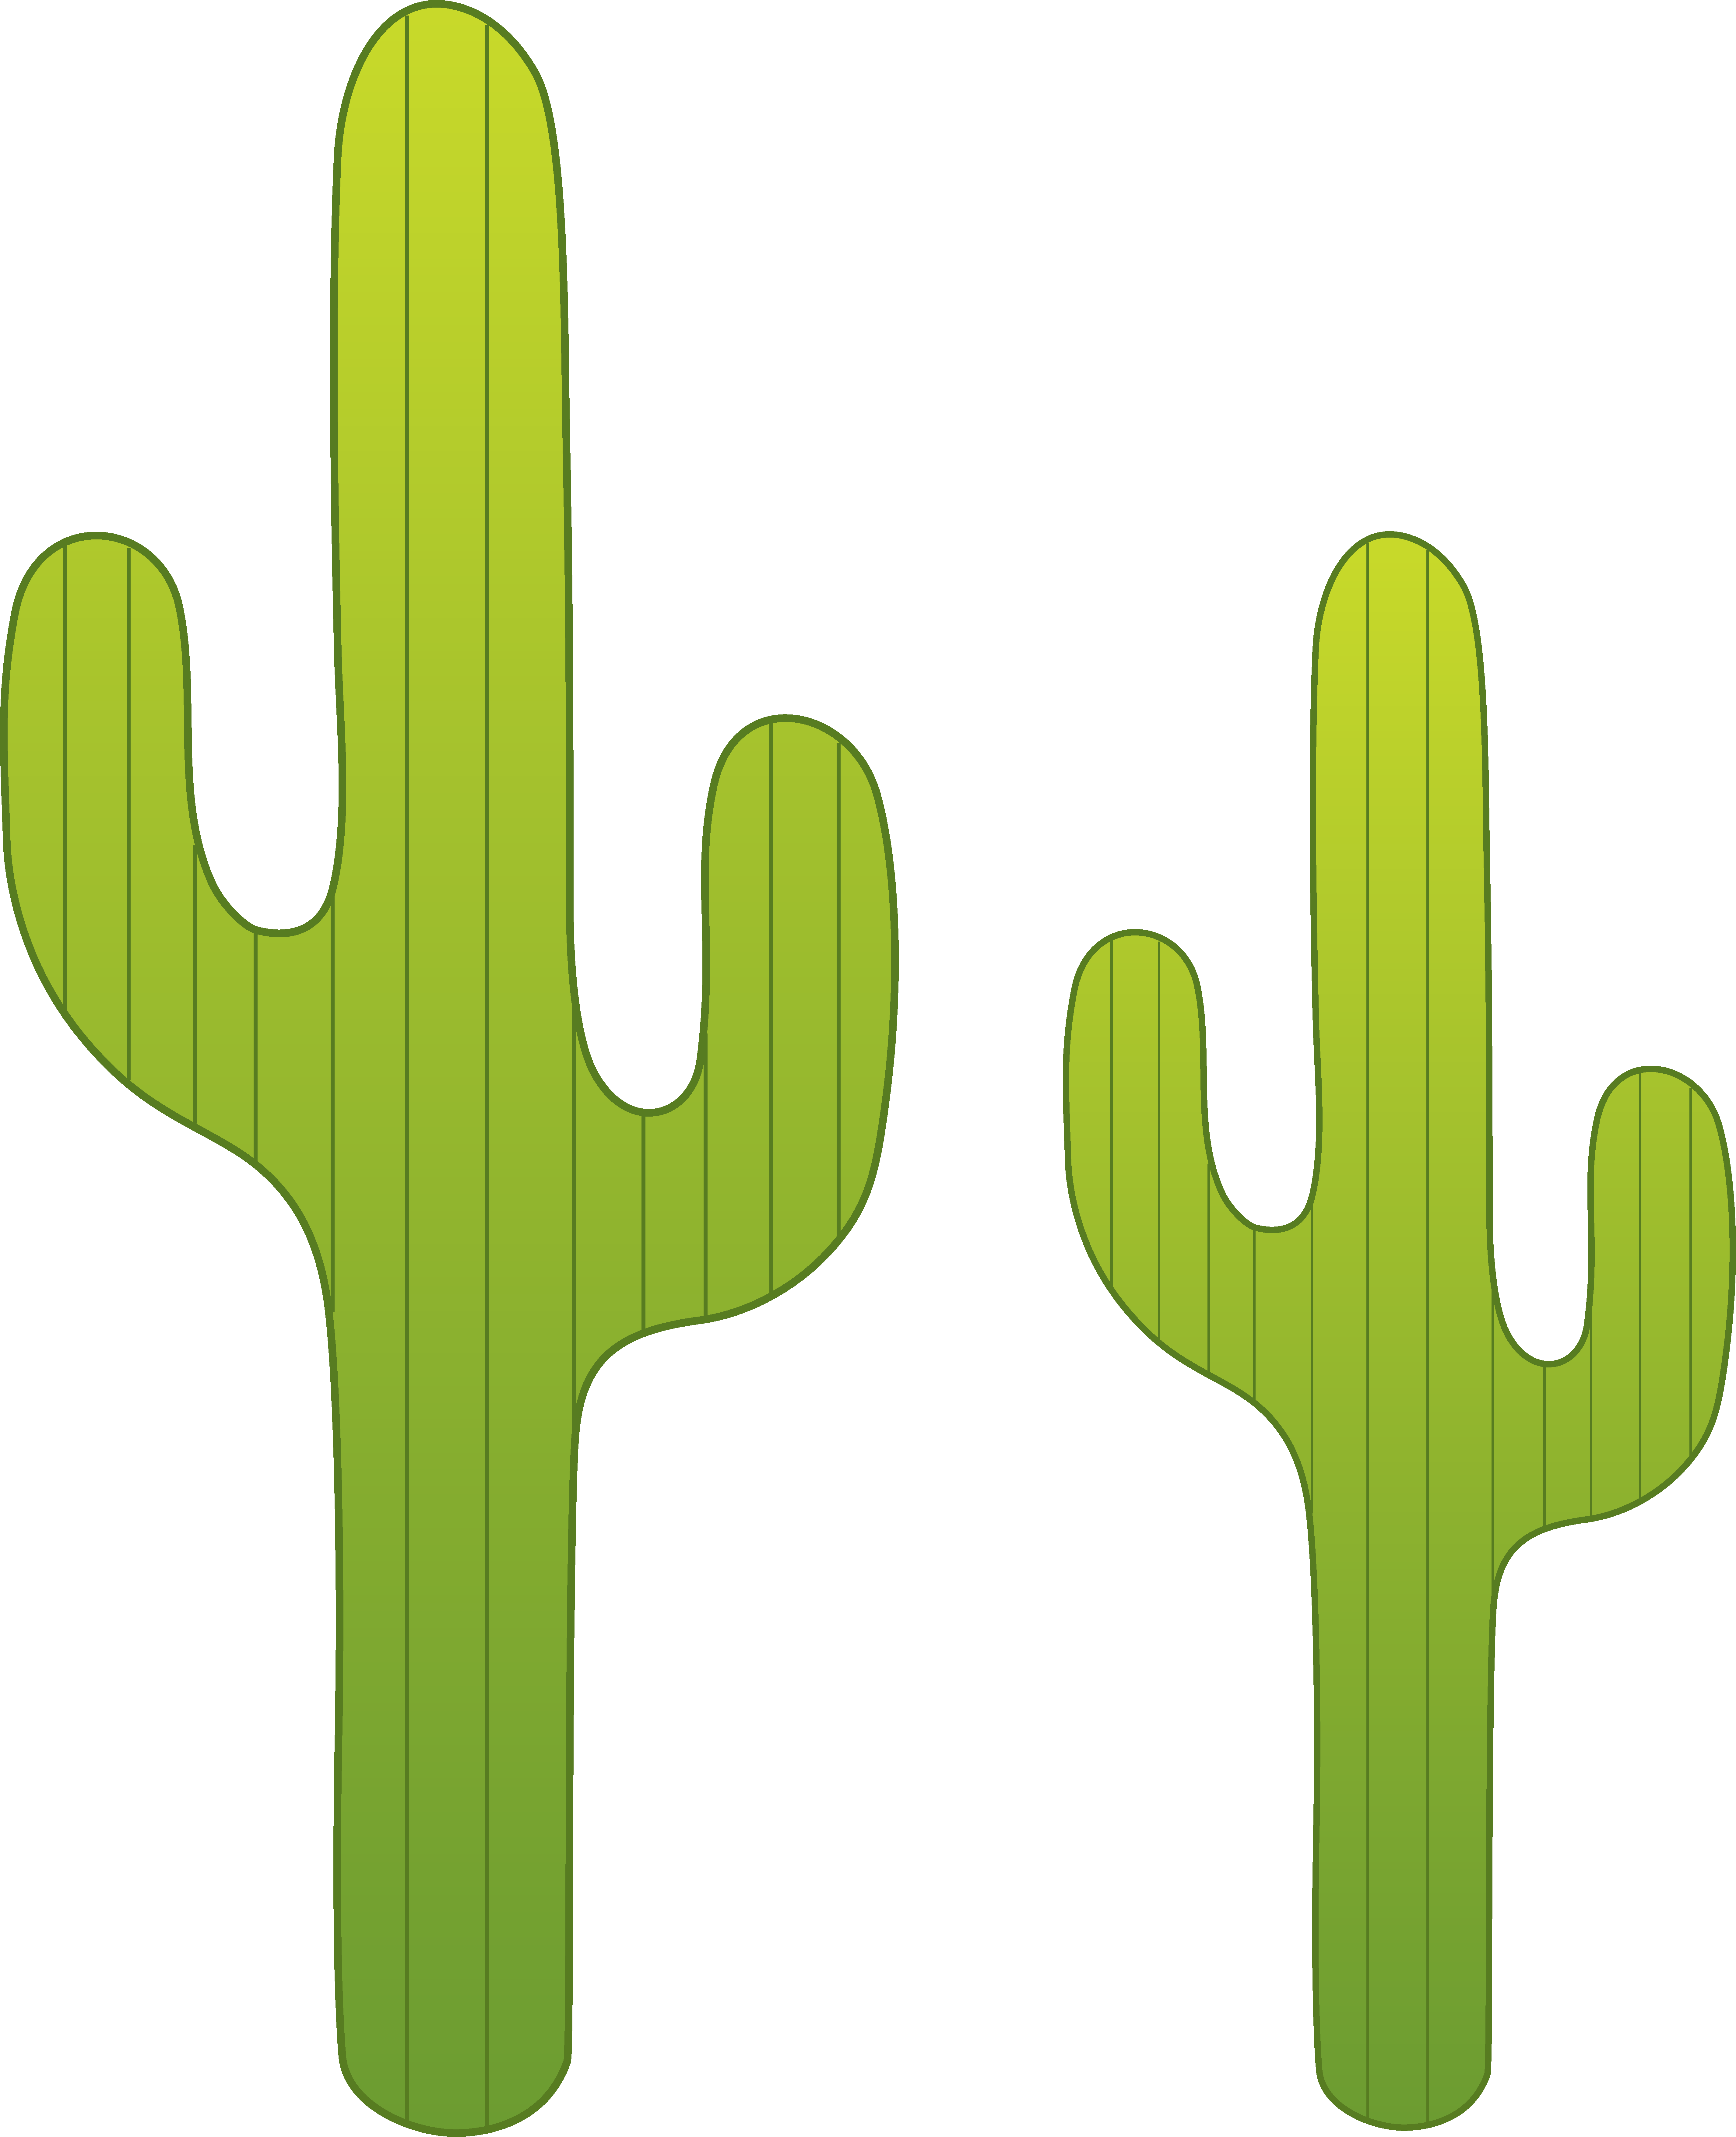 Free Cactus Clipart Transparent Background, Download Free Cactus